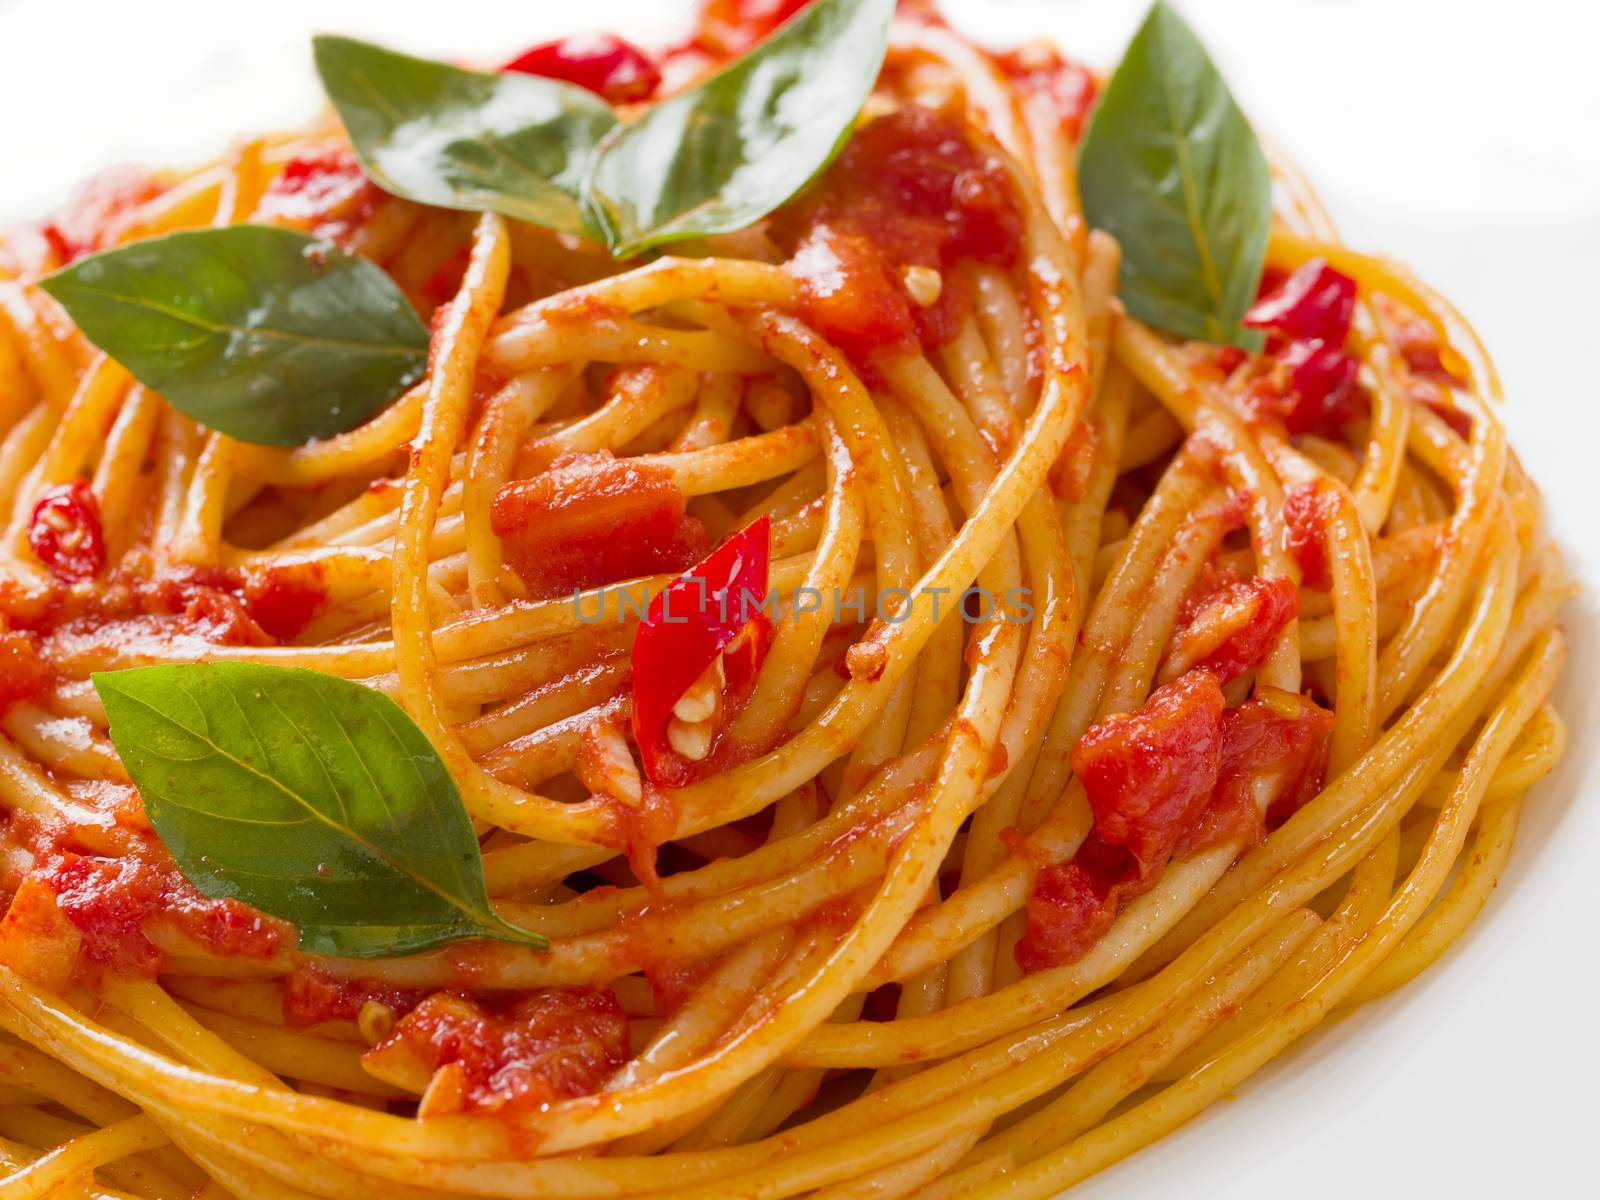 rustic italian spaghetti arrabbiata pasta by zkruger